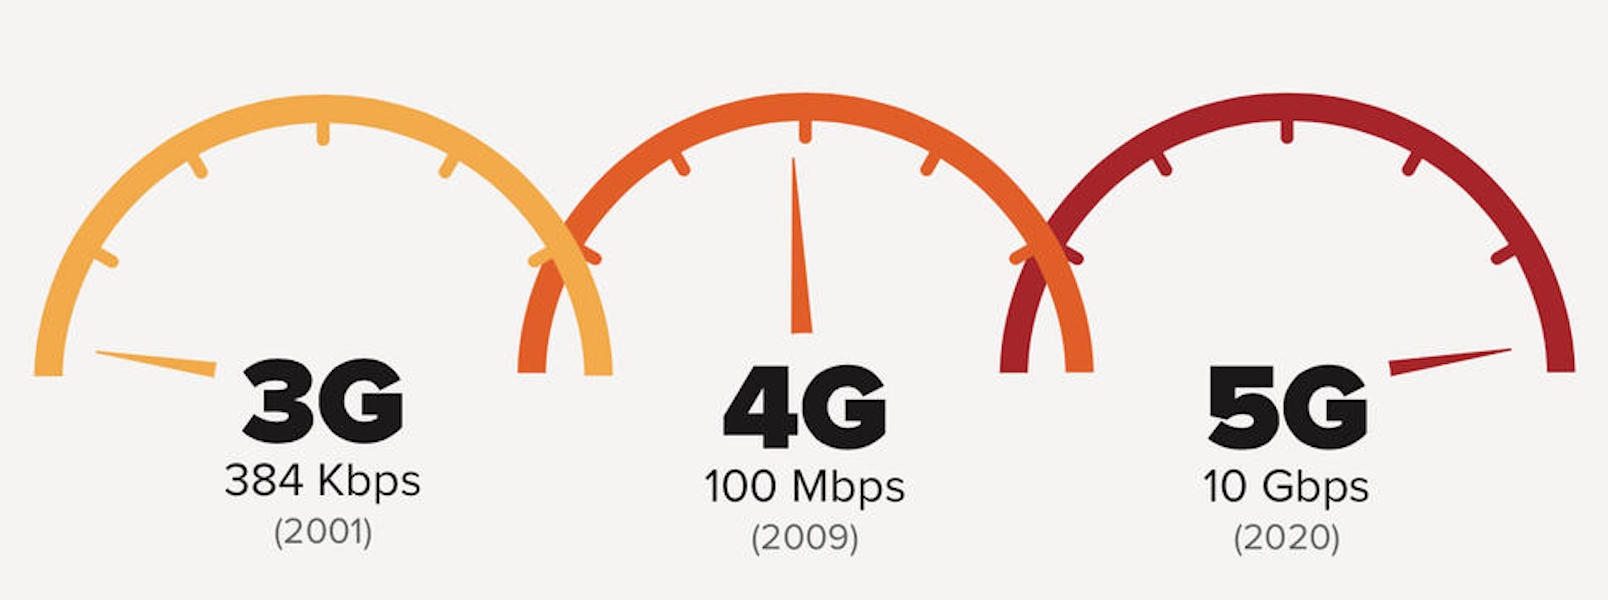 Www 4g. 4g vs 5g. Скорость 3g 4g 5g. Скорость интернета 3g и 4g. Скорость 1g 2g 3g 4g 5g.